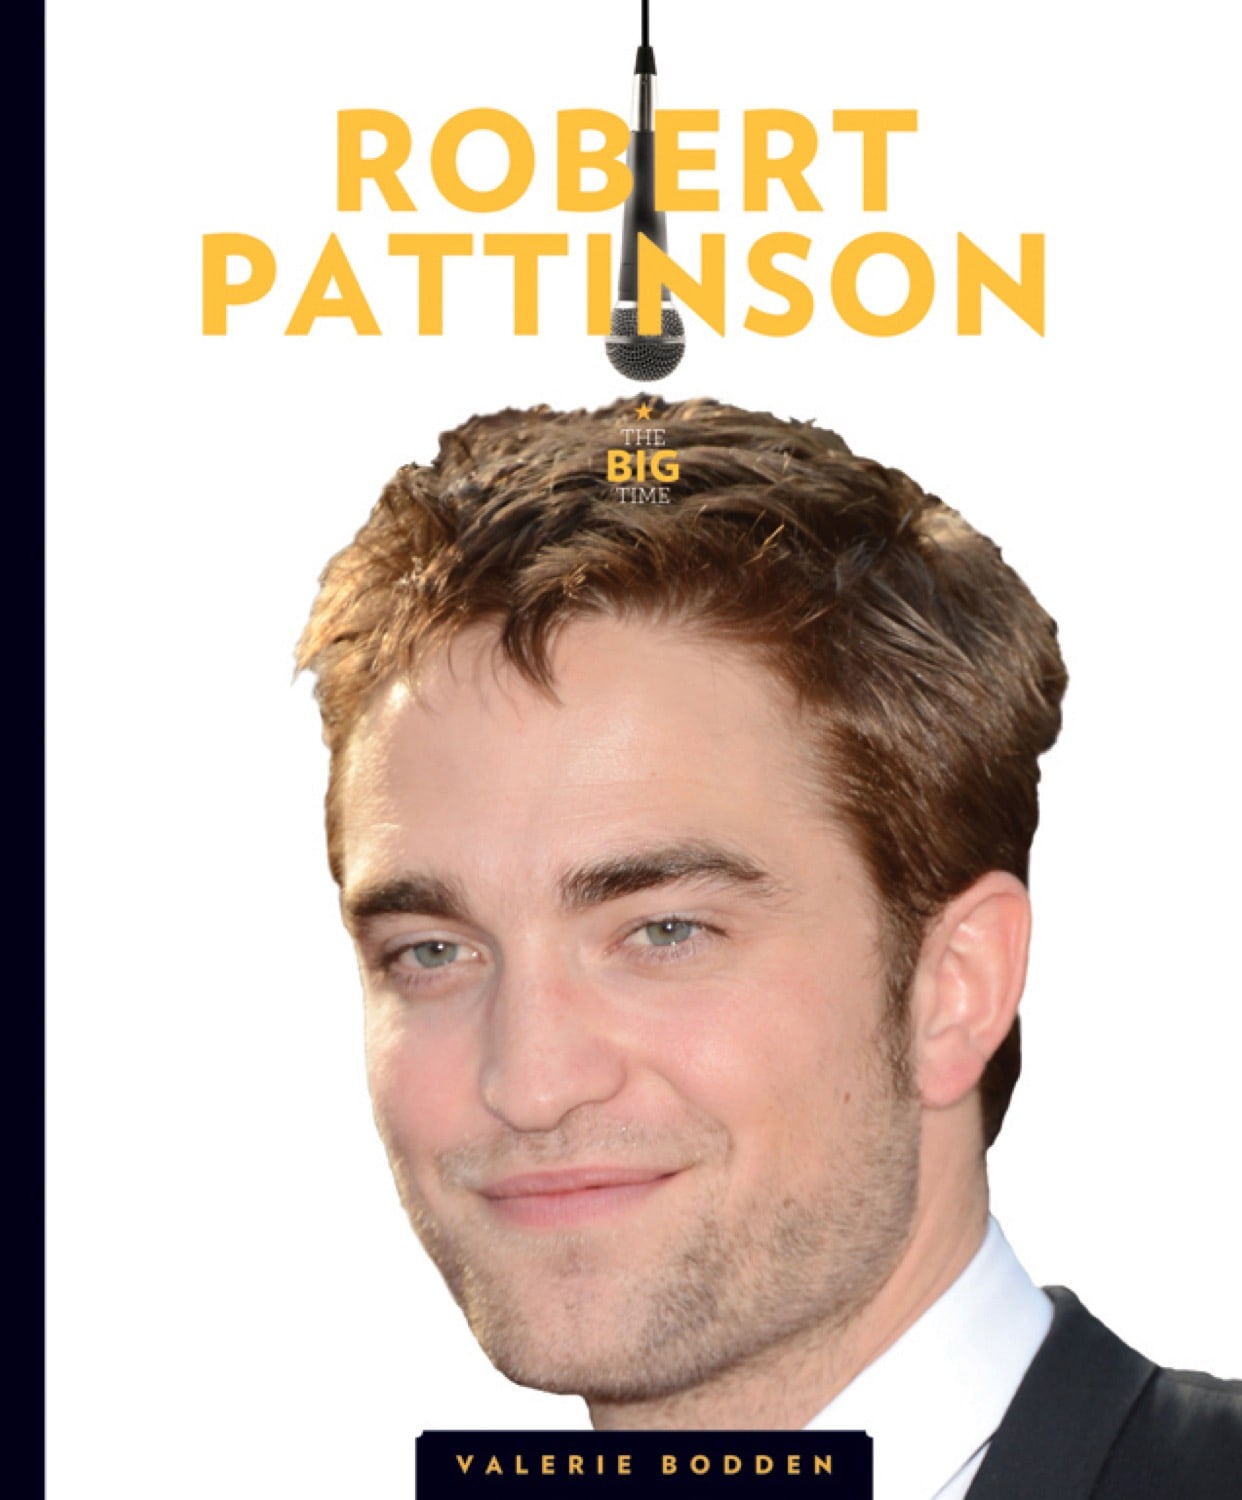 The Big Time: Robert Pattinson